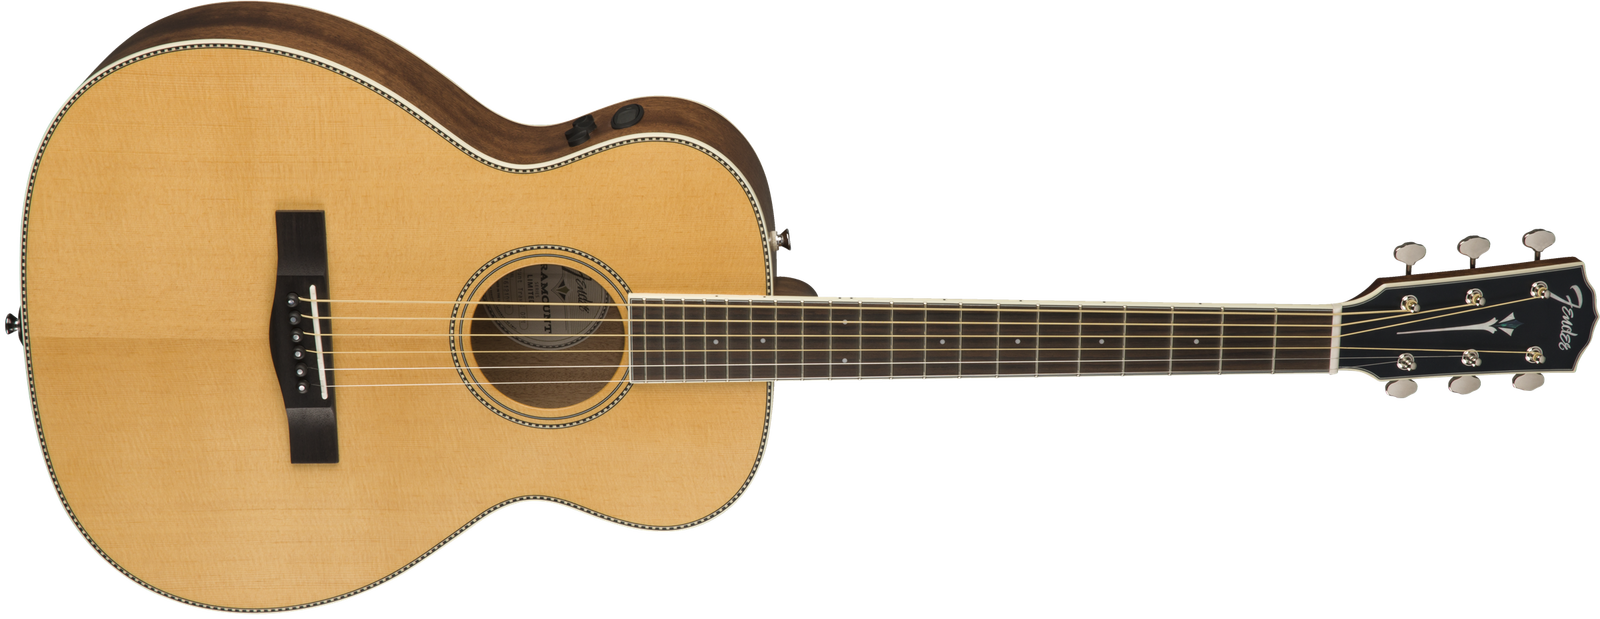 Norton Secured Acoustic Guitar